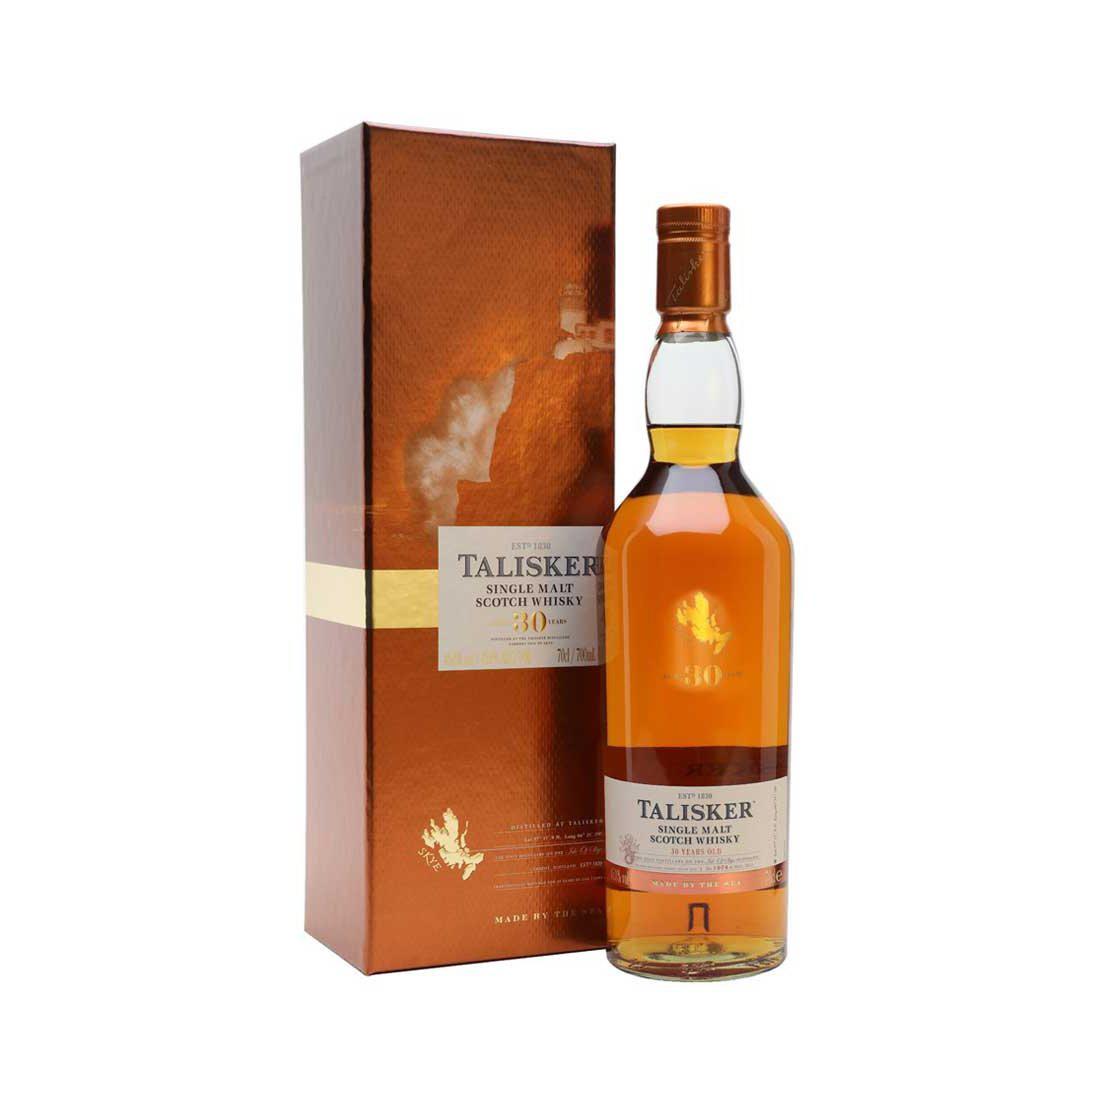 Talisker 30 Year Old Single Malt Scotch Whisky 700ml